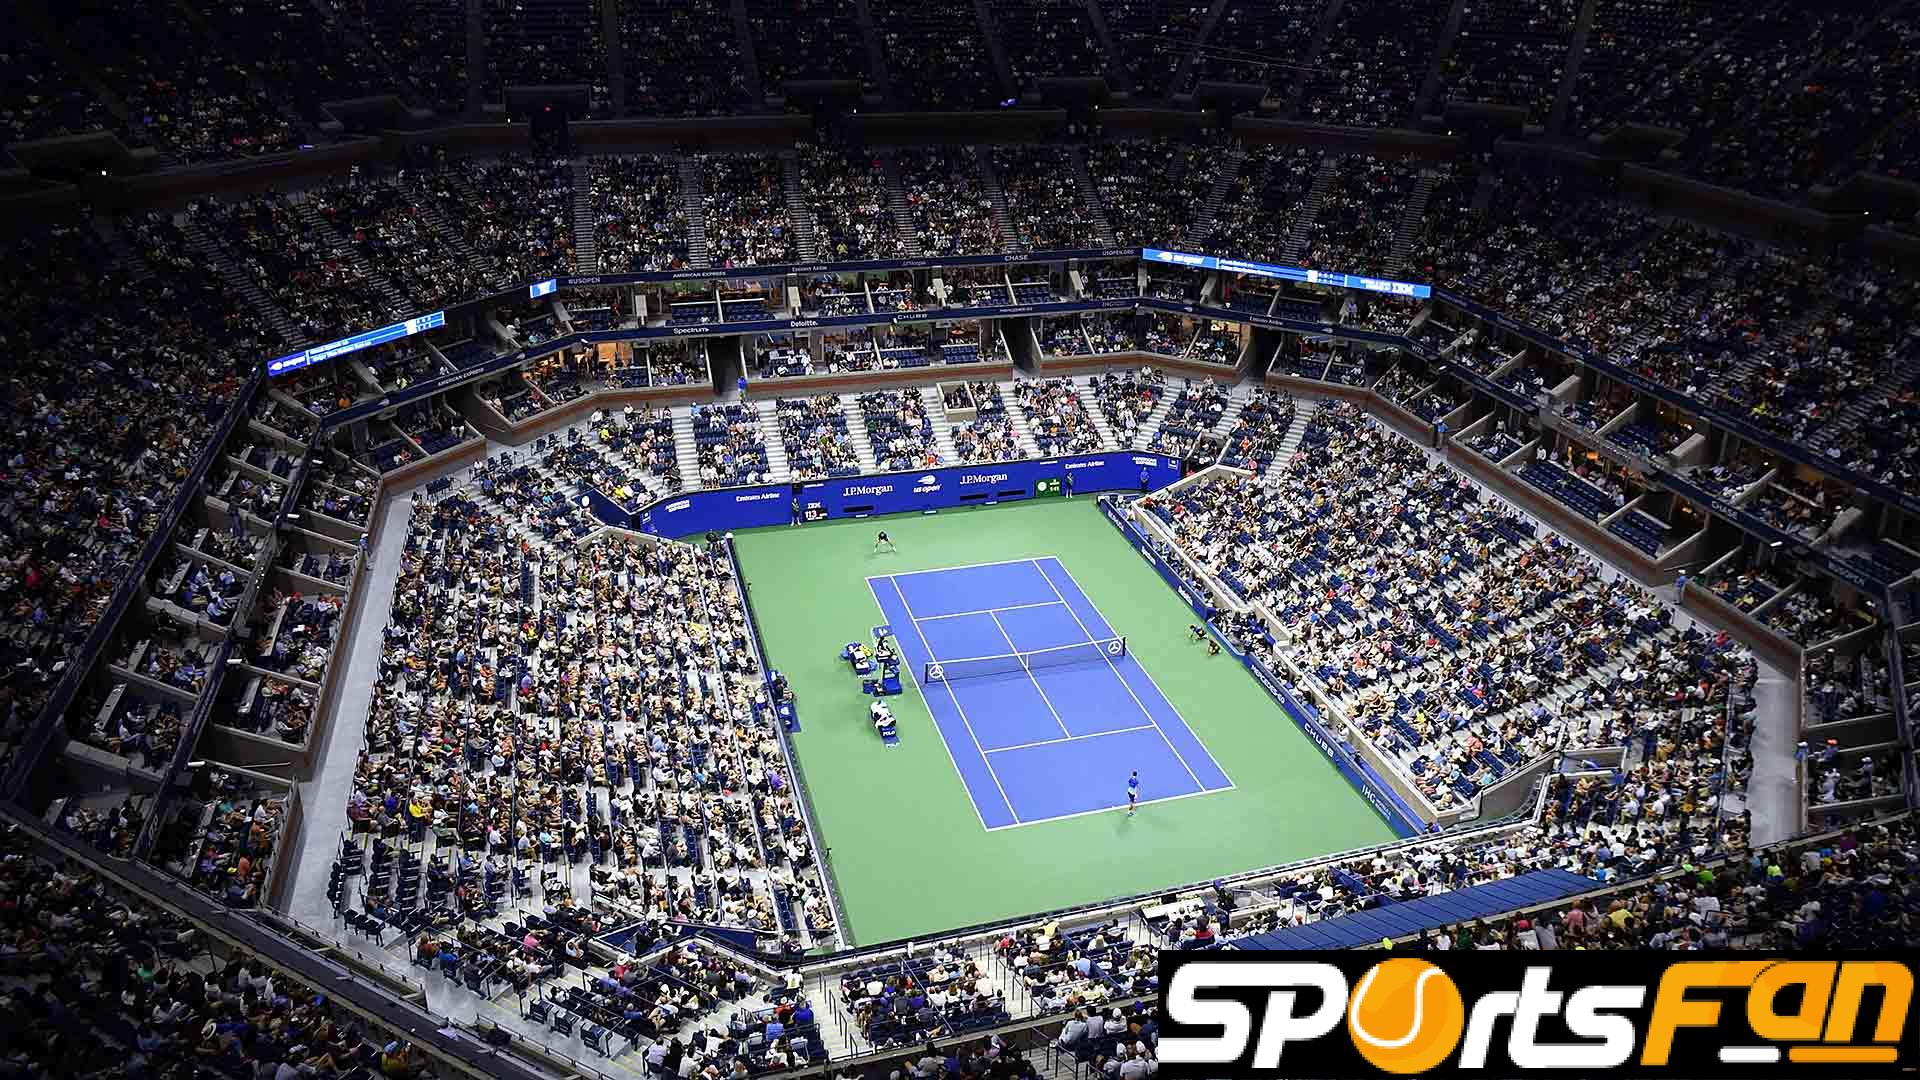 Grand Slam Tennis Tournaments